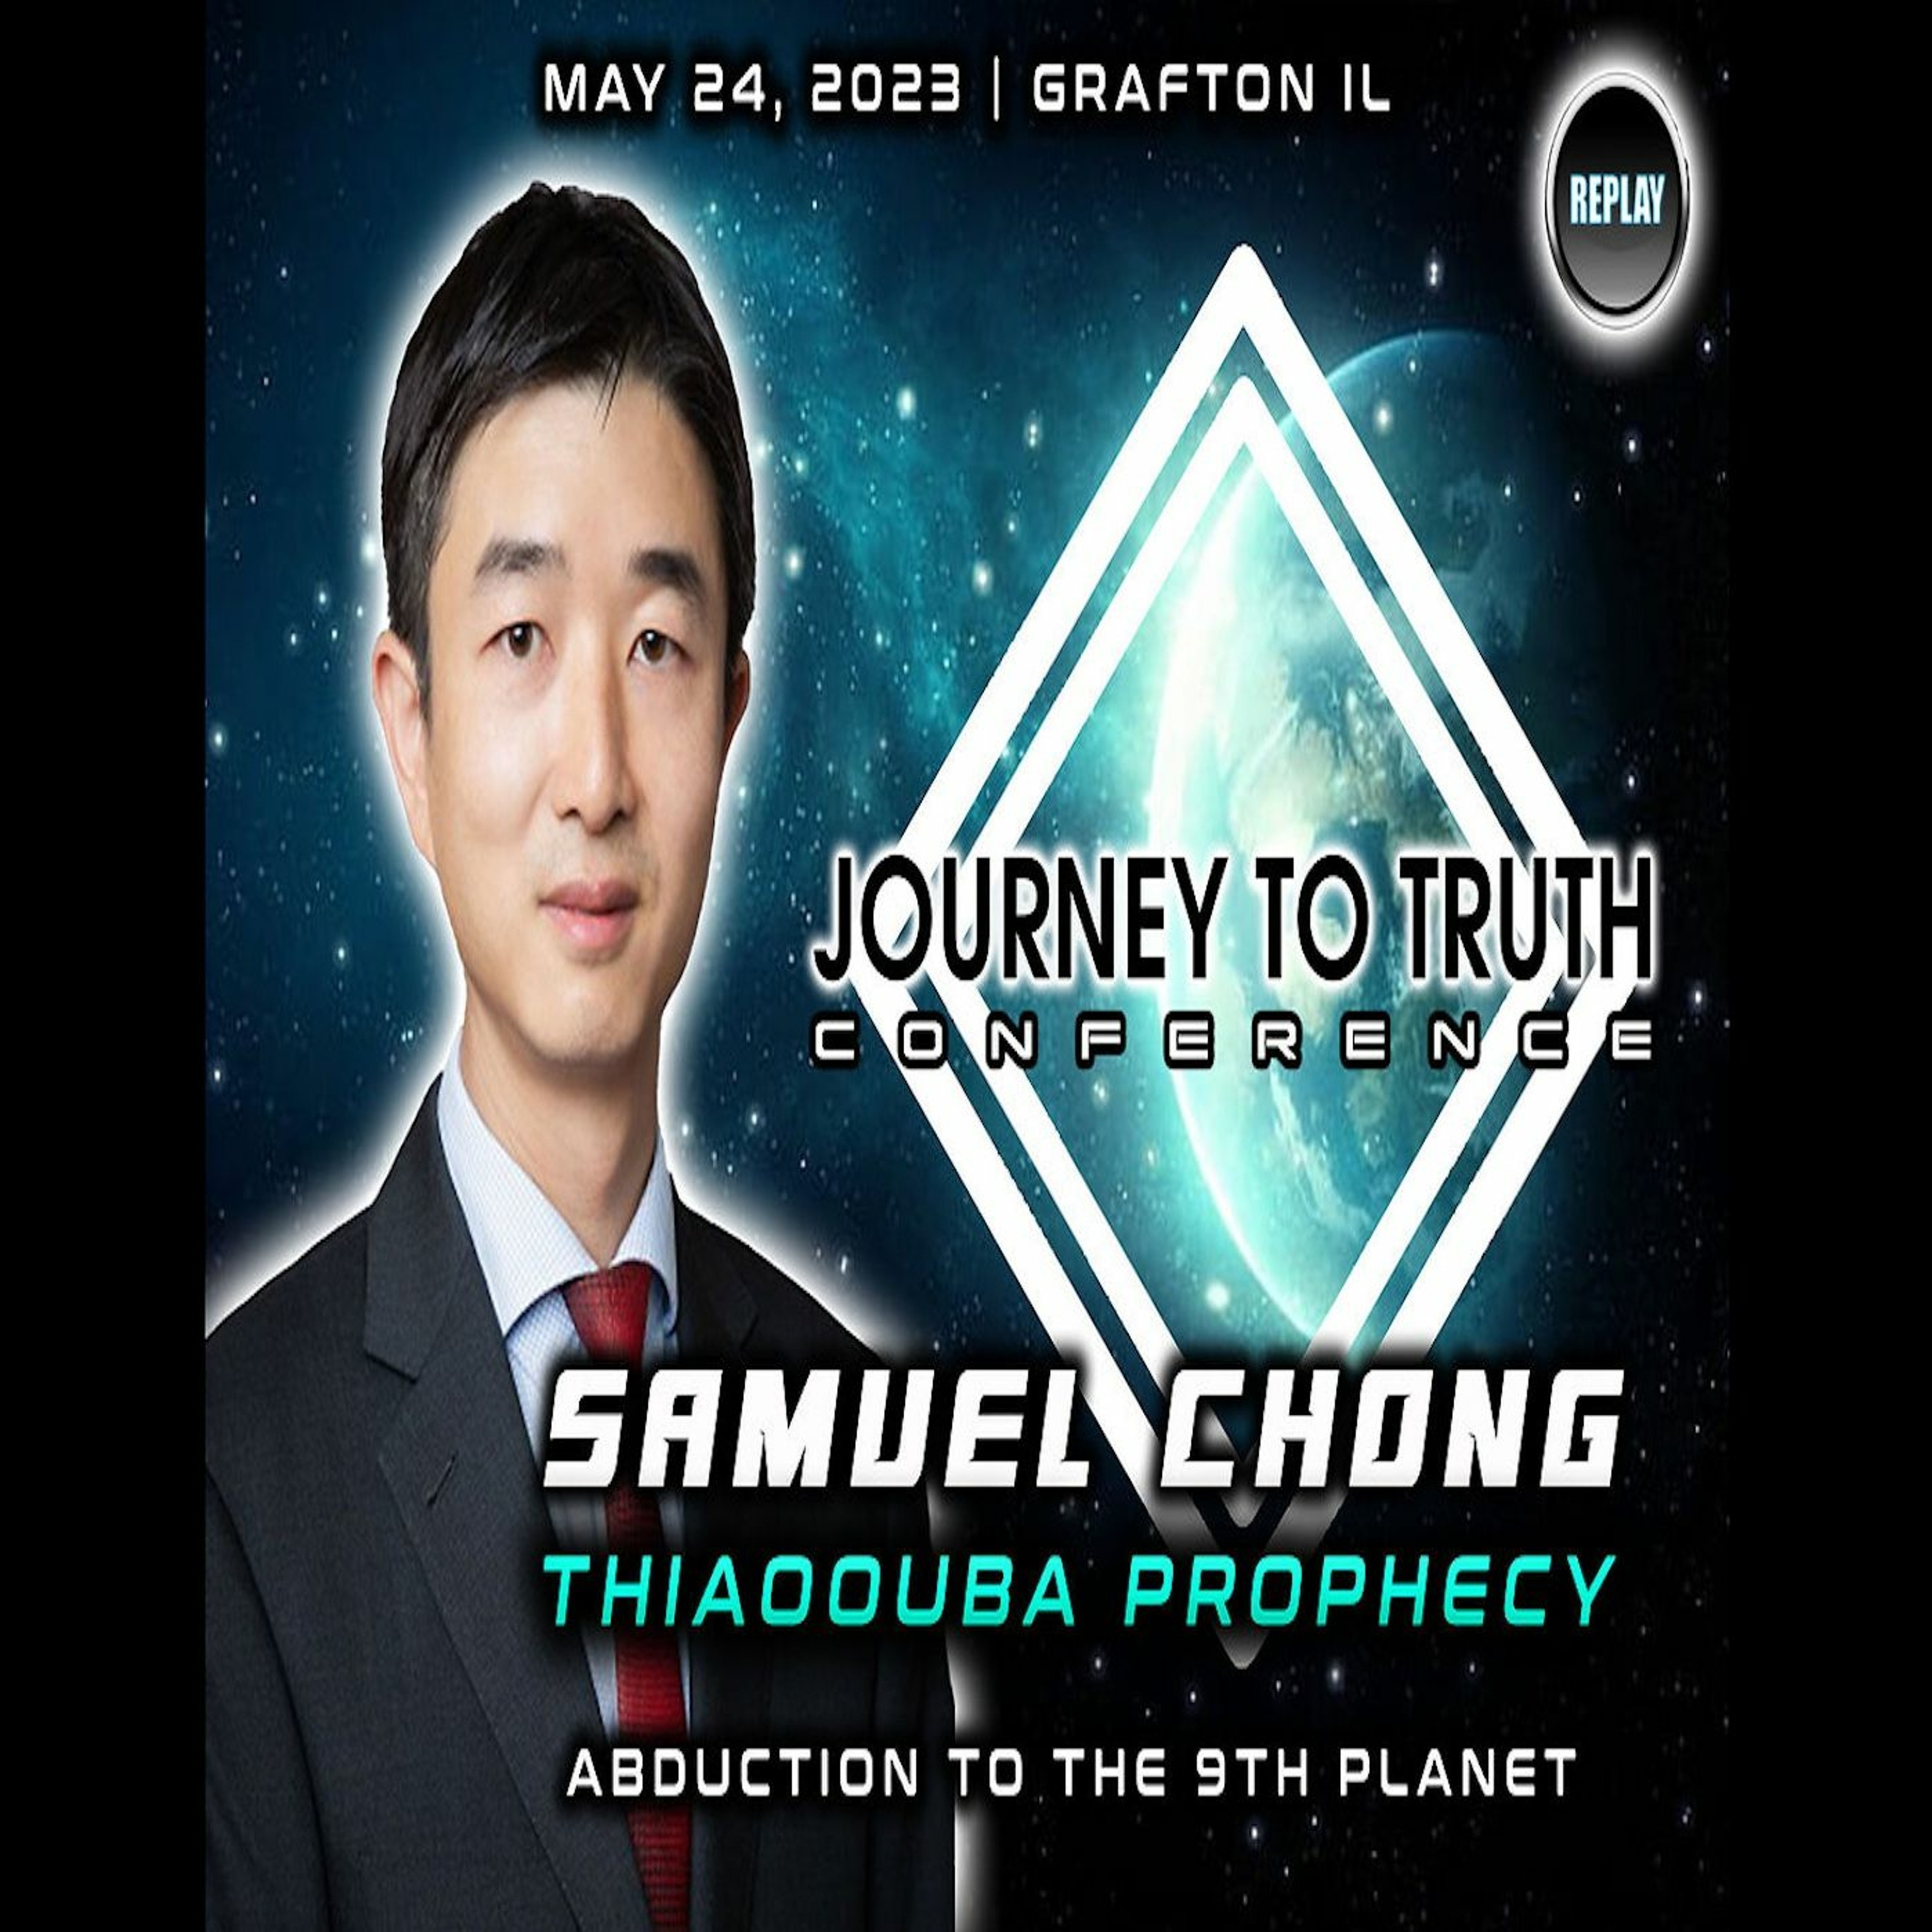 SAMUEL CHONG | THIAOOUBA PROPECHY - ABDUCTION TO THE 9TH PLANET